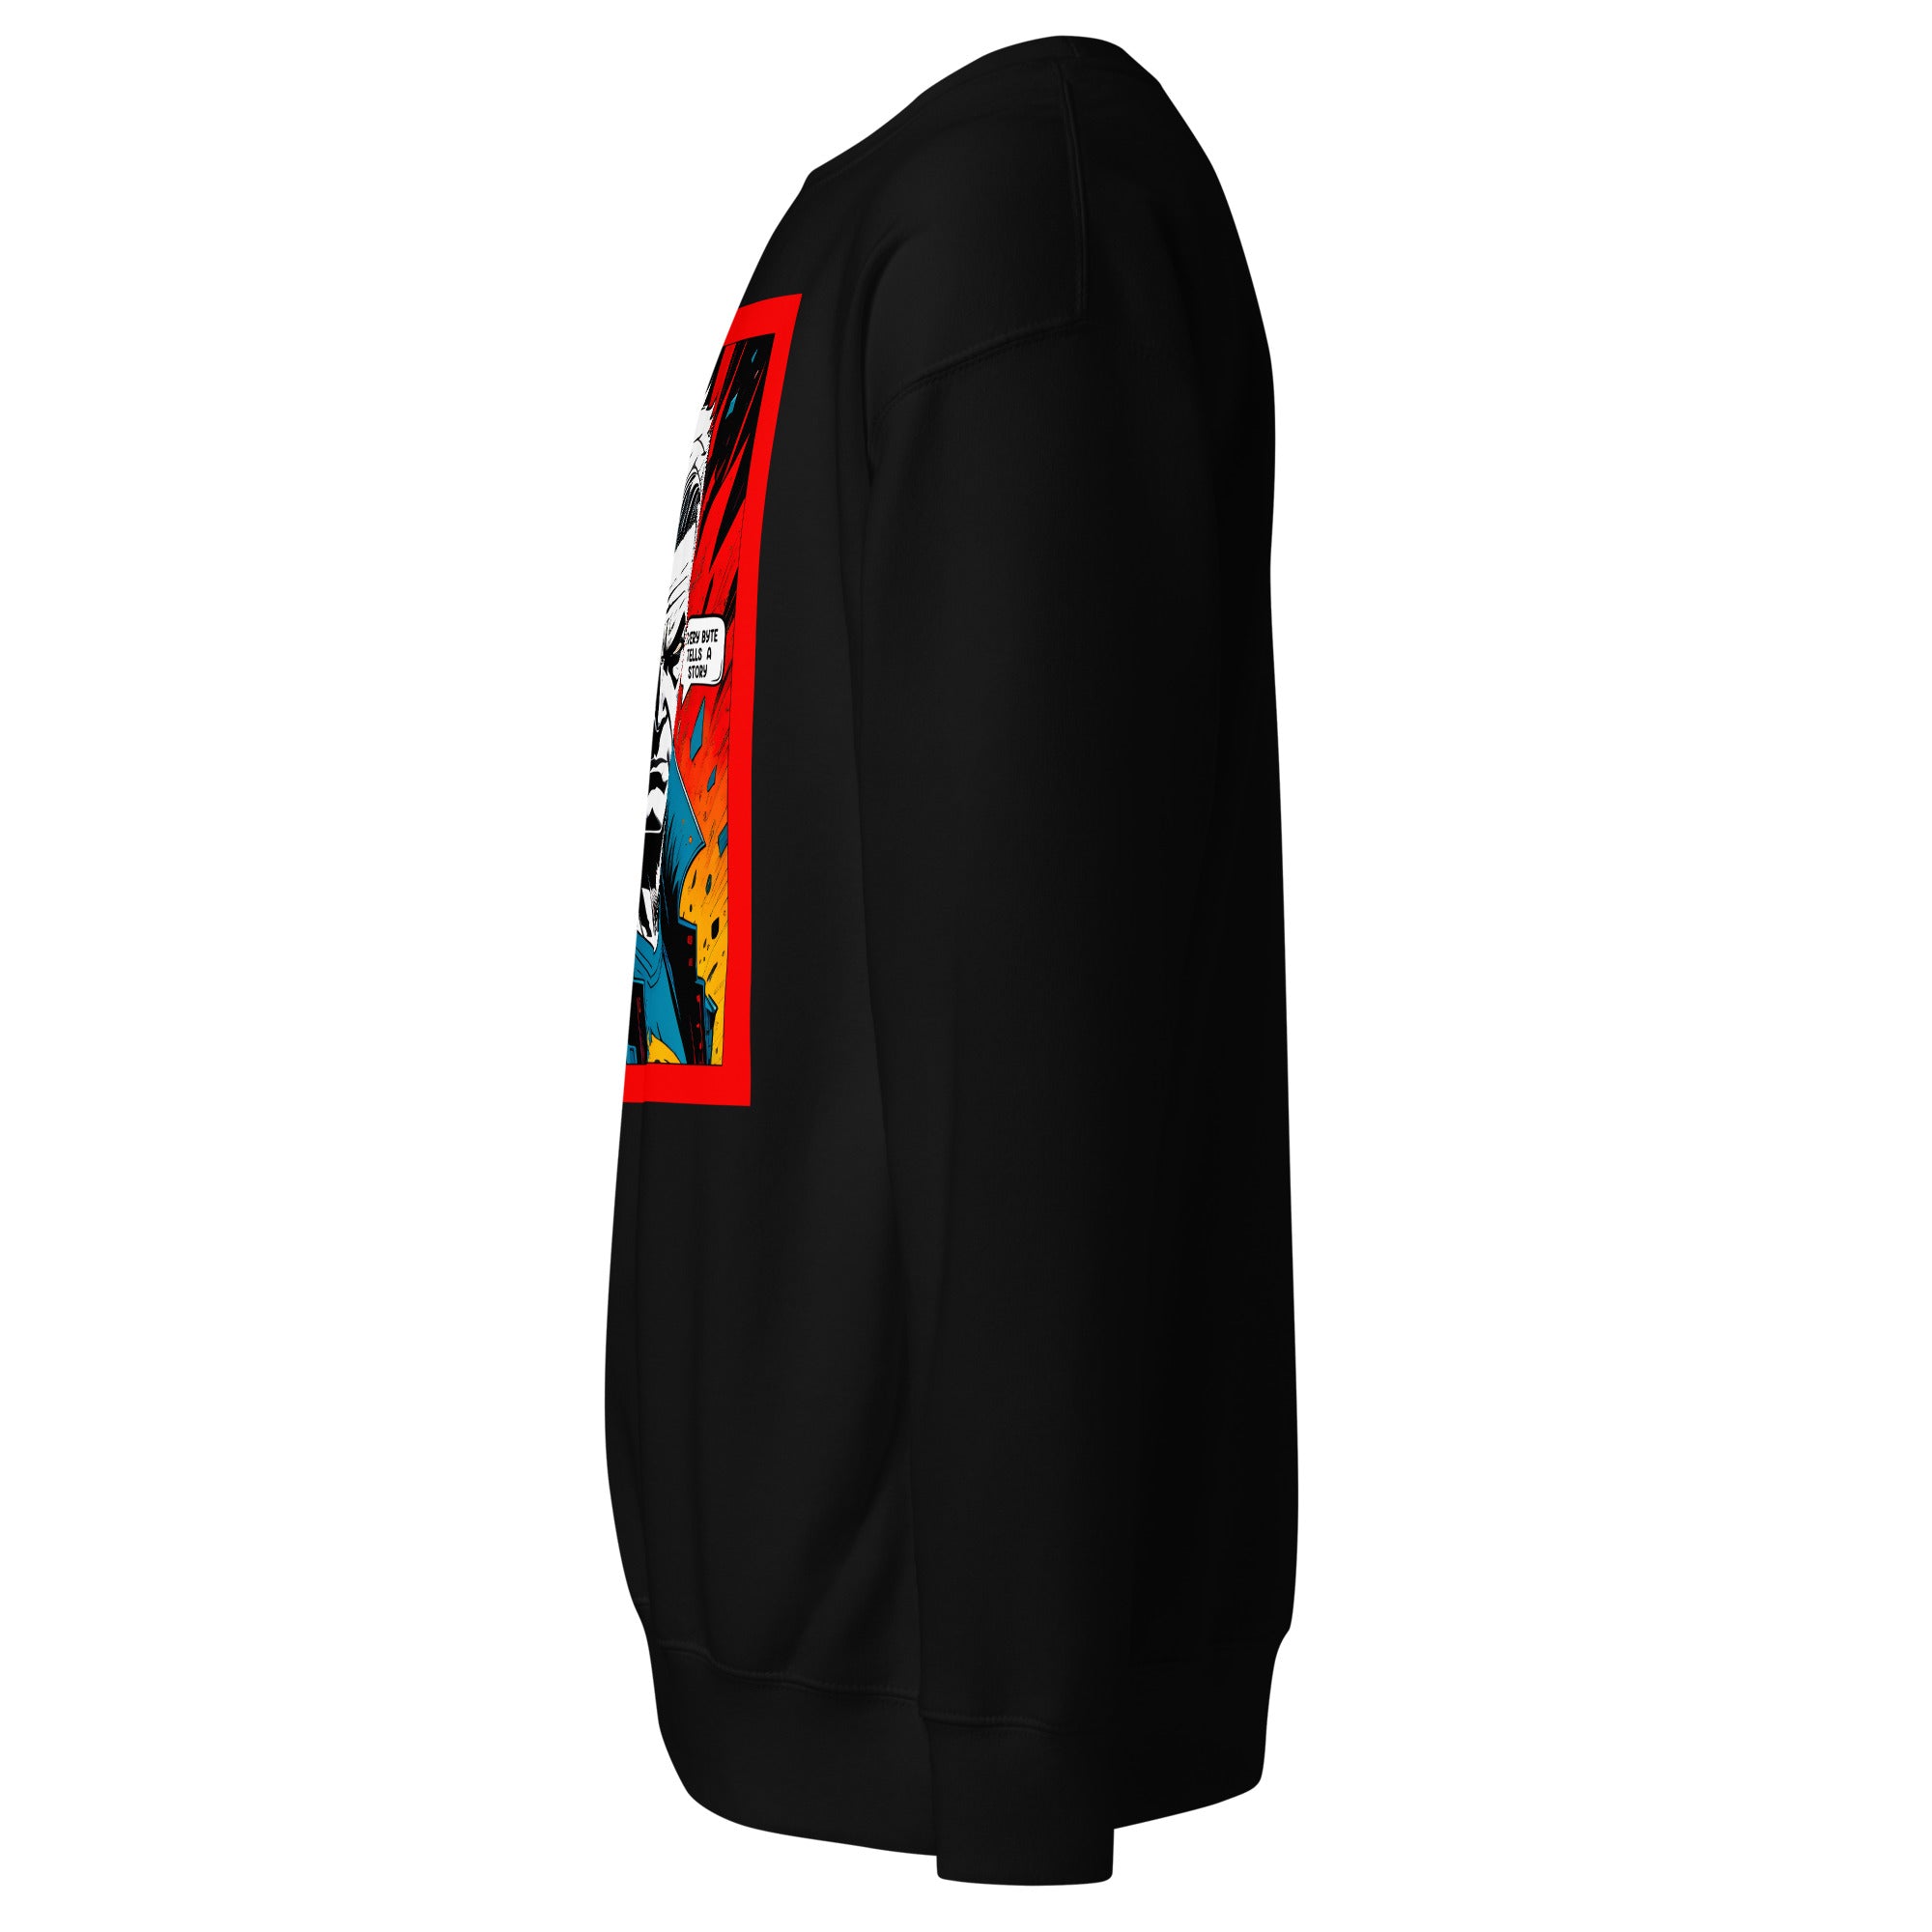 Unisex Premium Sweatshirt - Agent Red Cyberpunk Series v.36